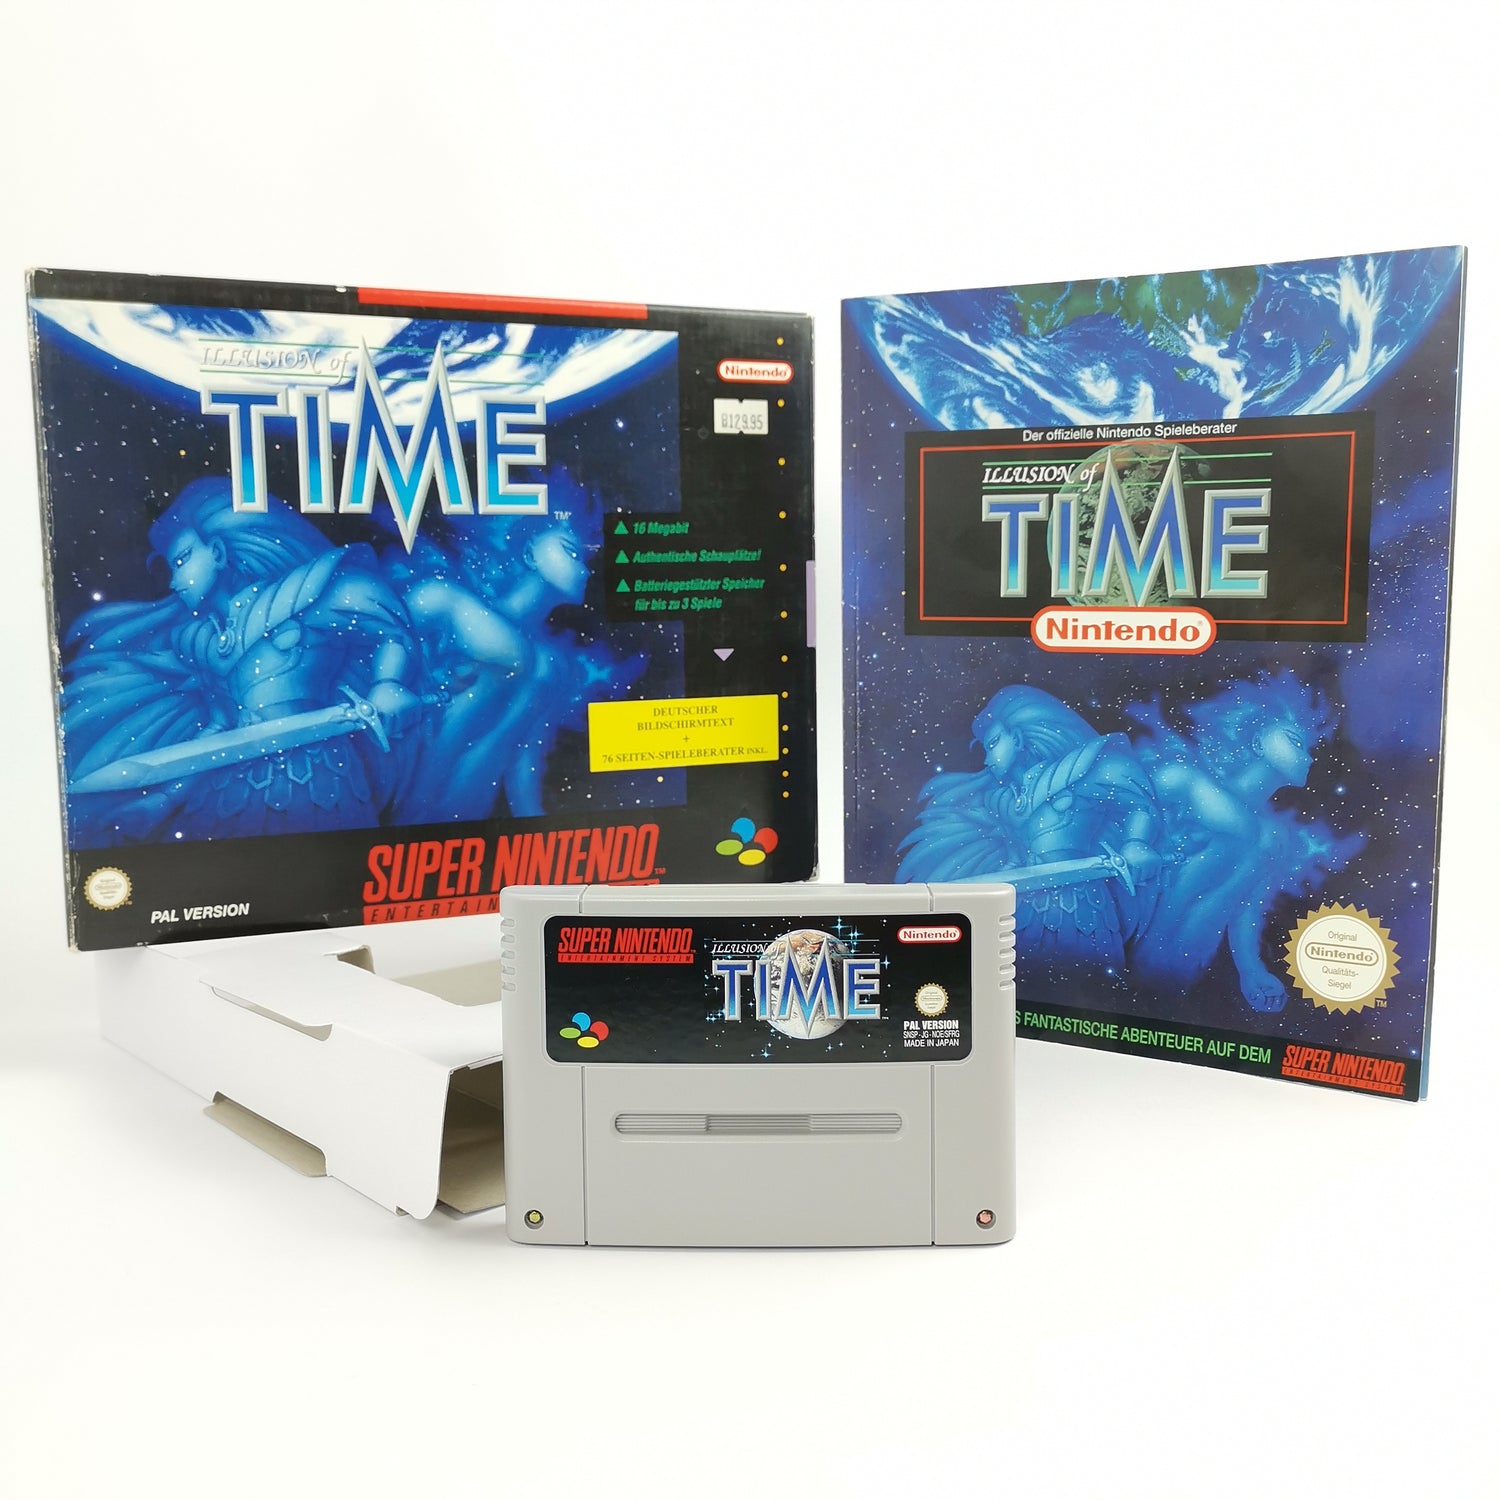 Super Nintendo Game: Illusion of Time | SNES Big Box OVP - PAL Version NOE